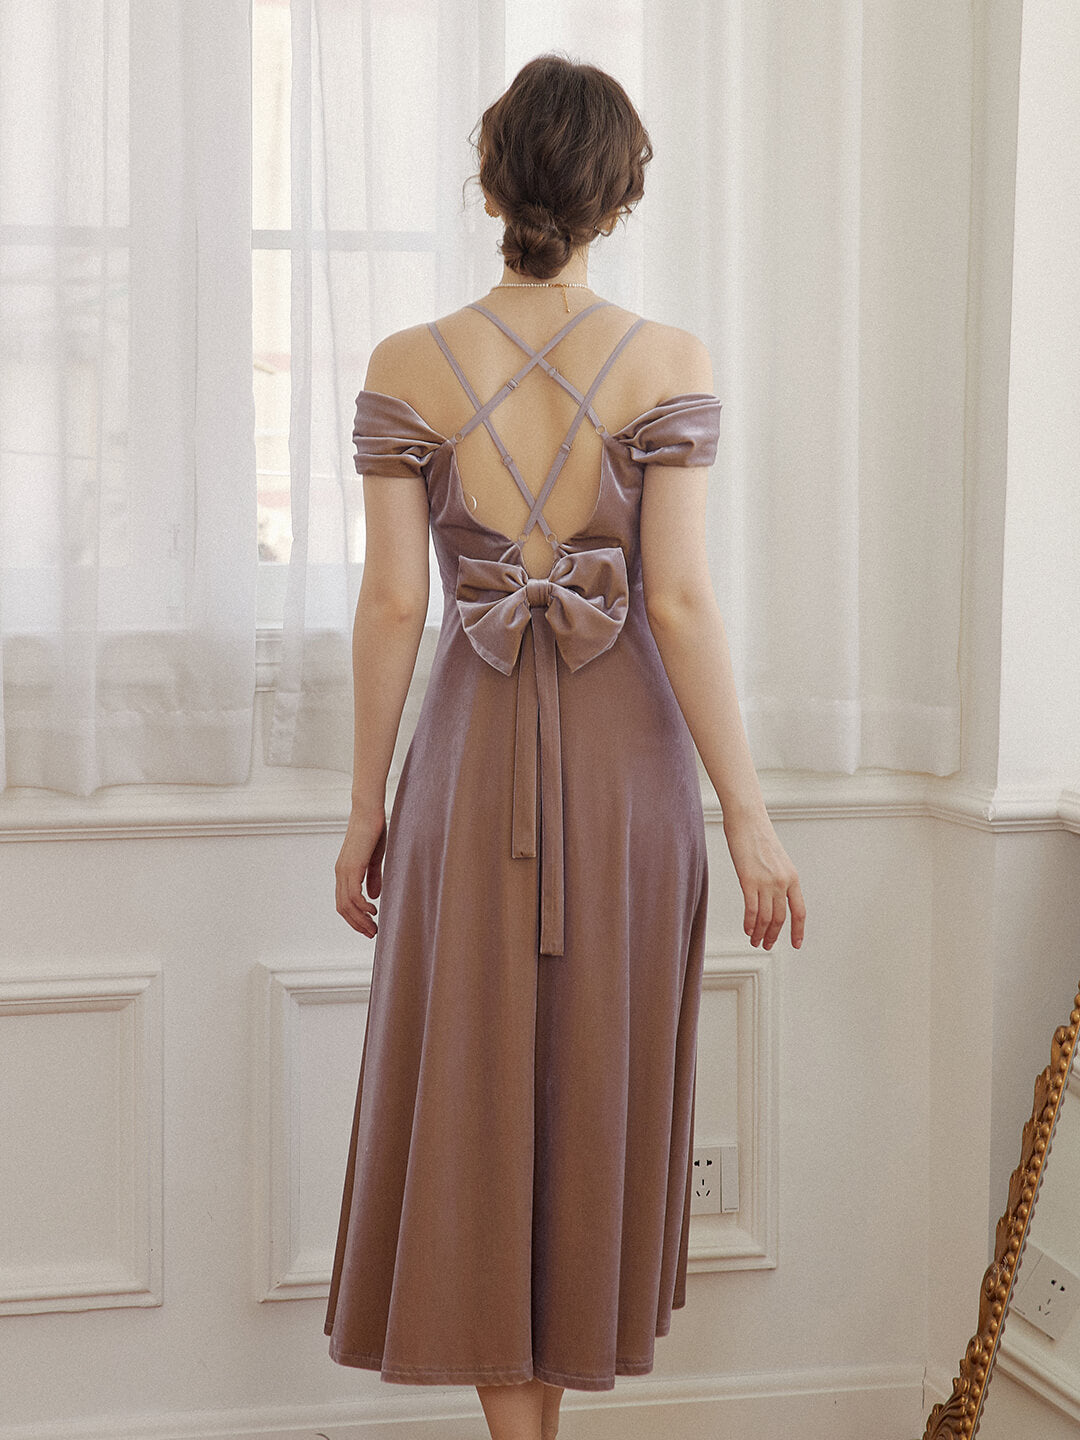 Simpleretro Journee Lace One-shoulder Purple Velvet Dress-3